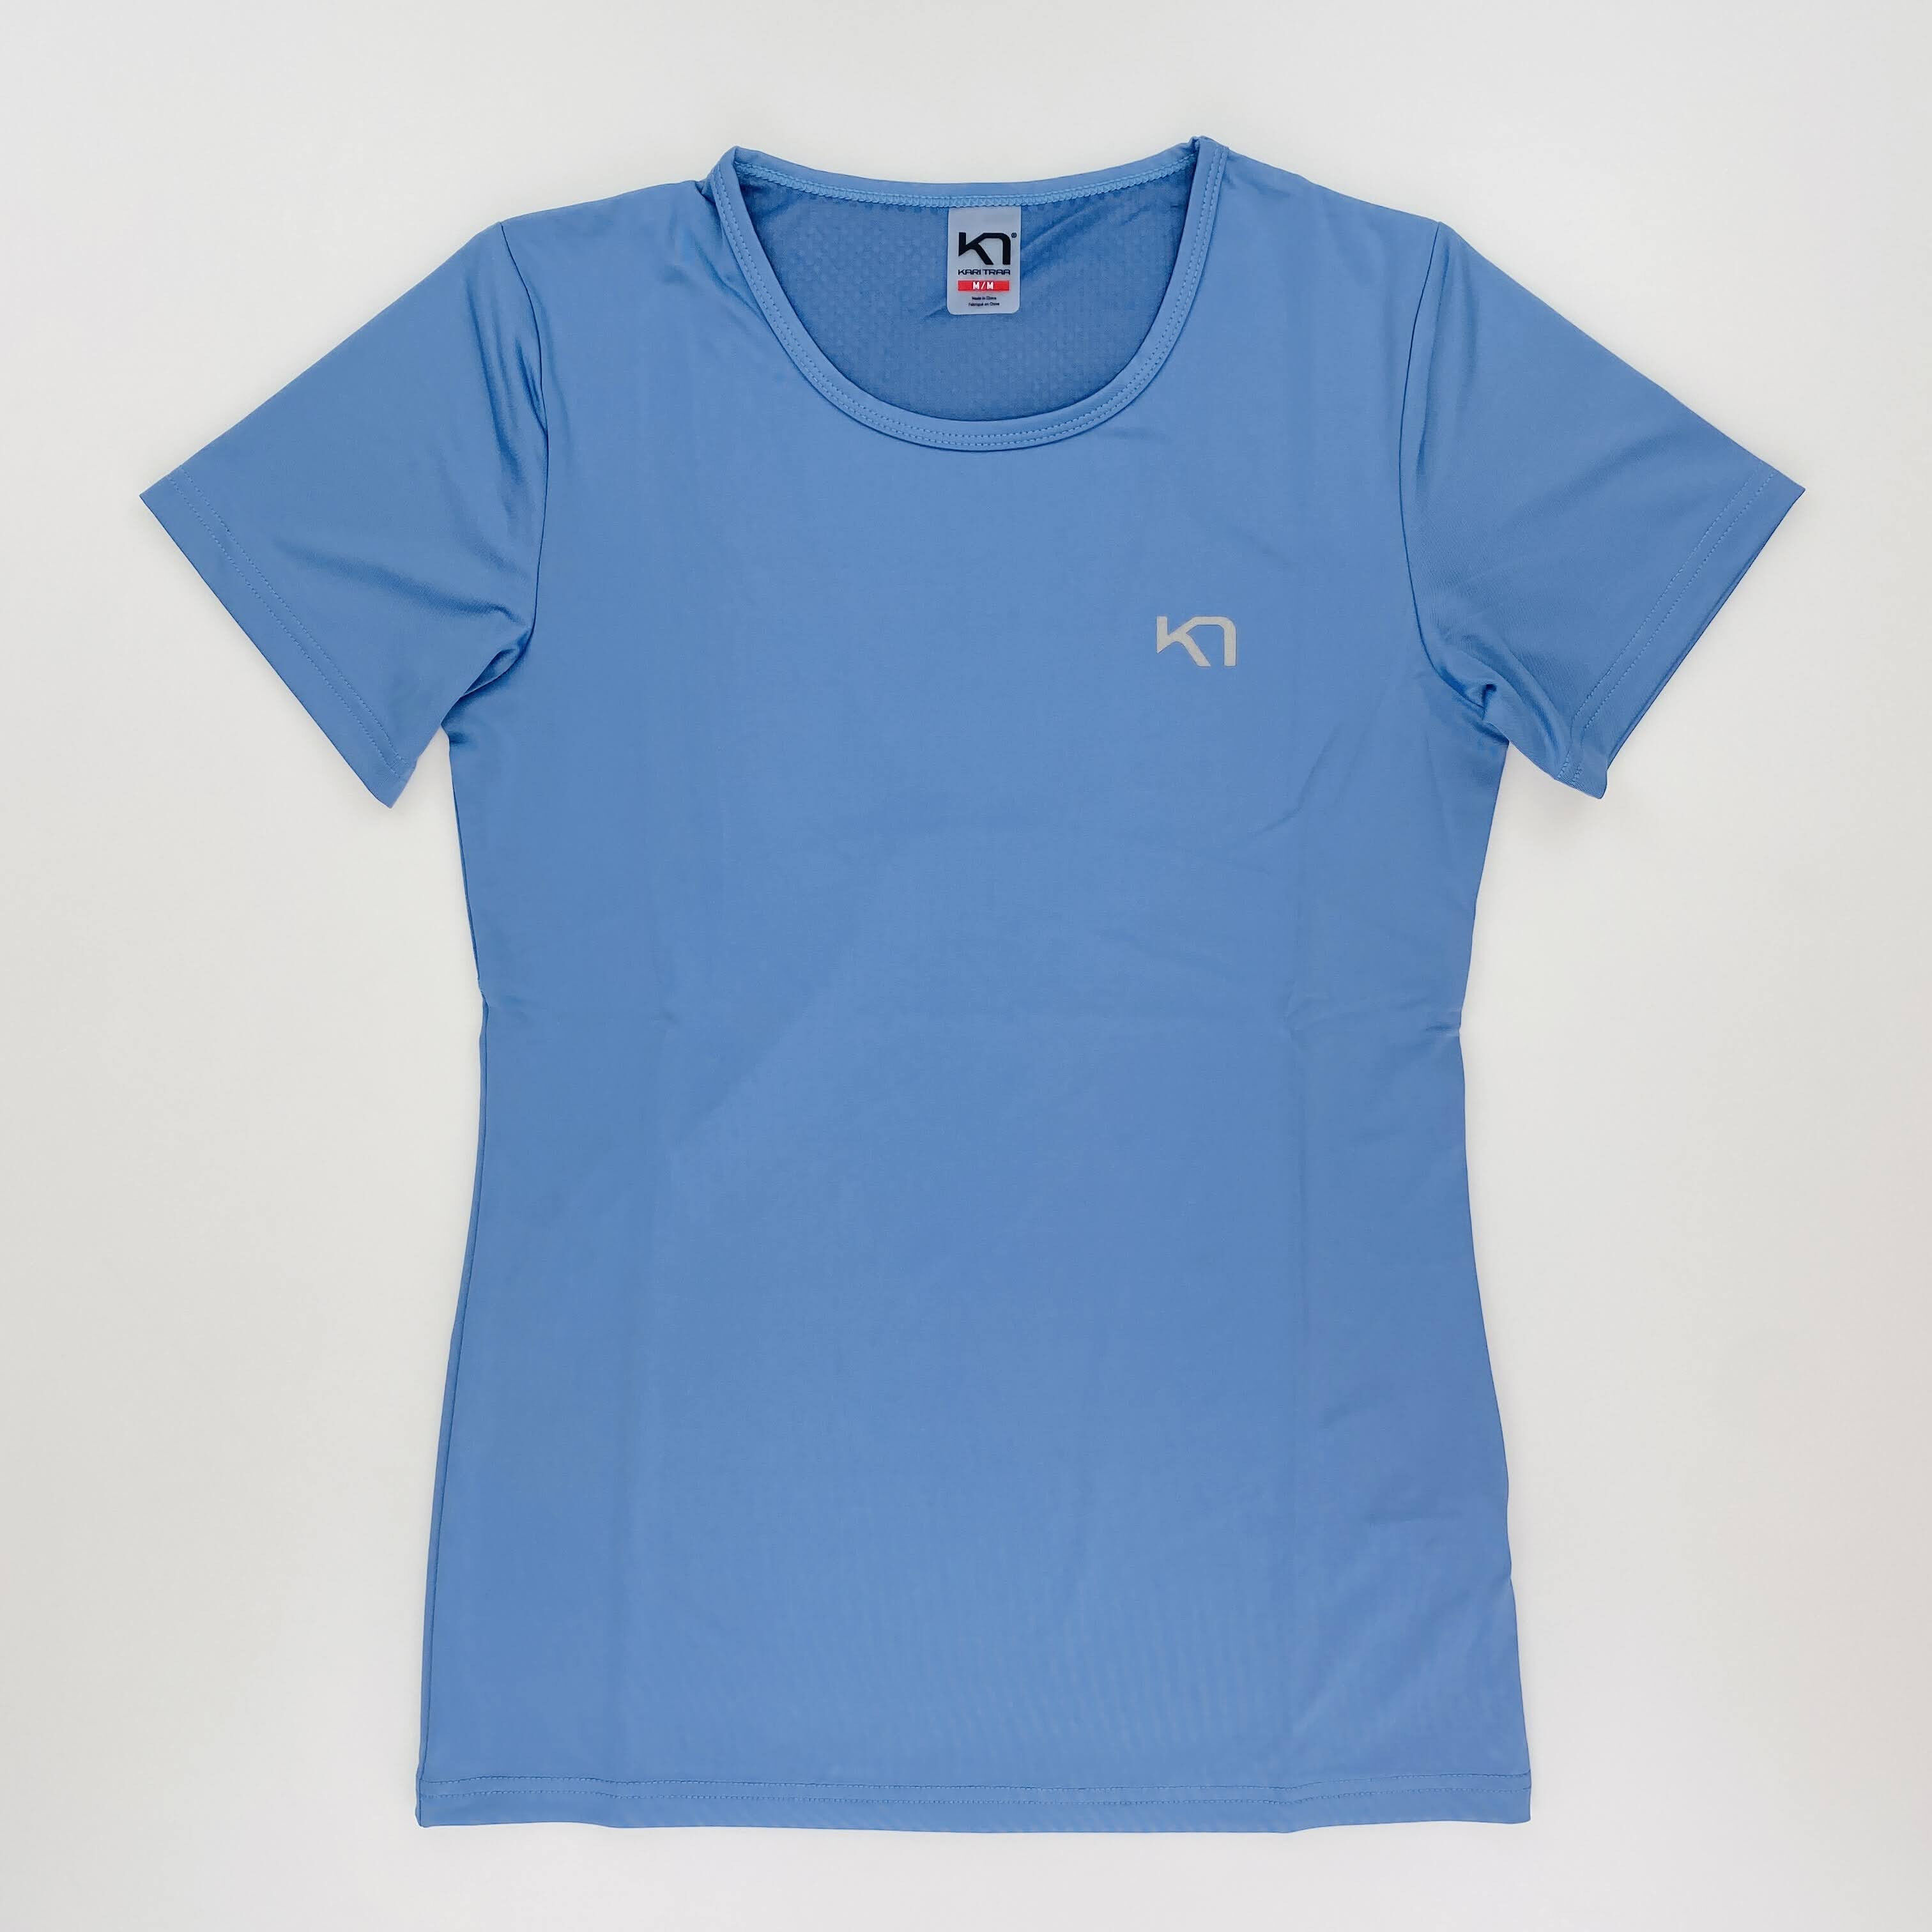 Kari Traa Mari Tee - Second Hand T-Shirt - Damen - Blau - M | Hardloop